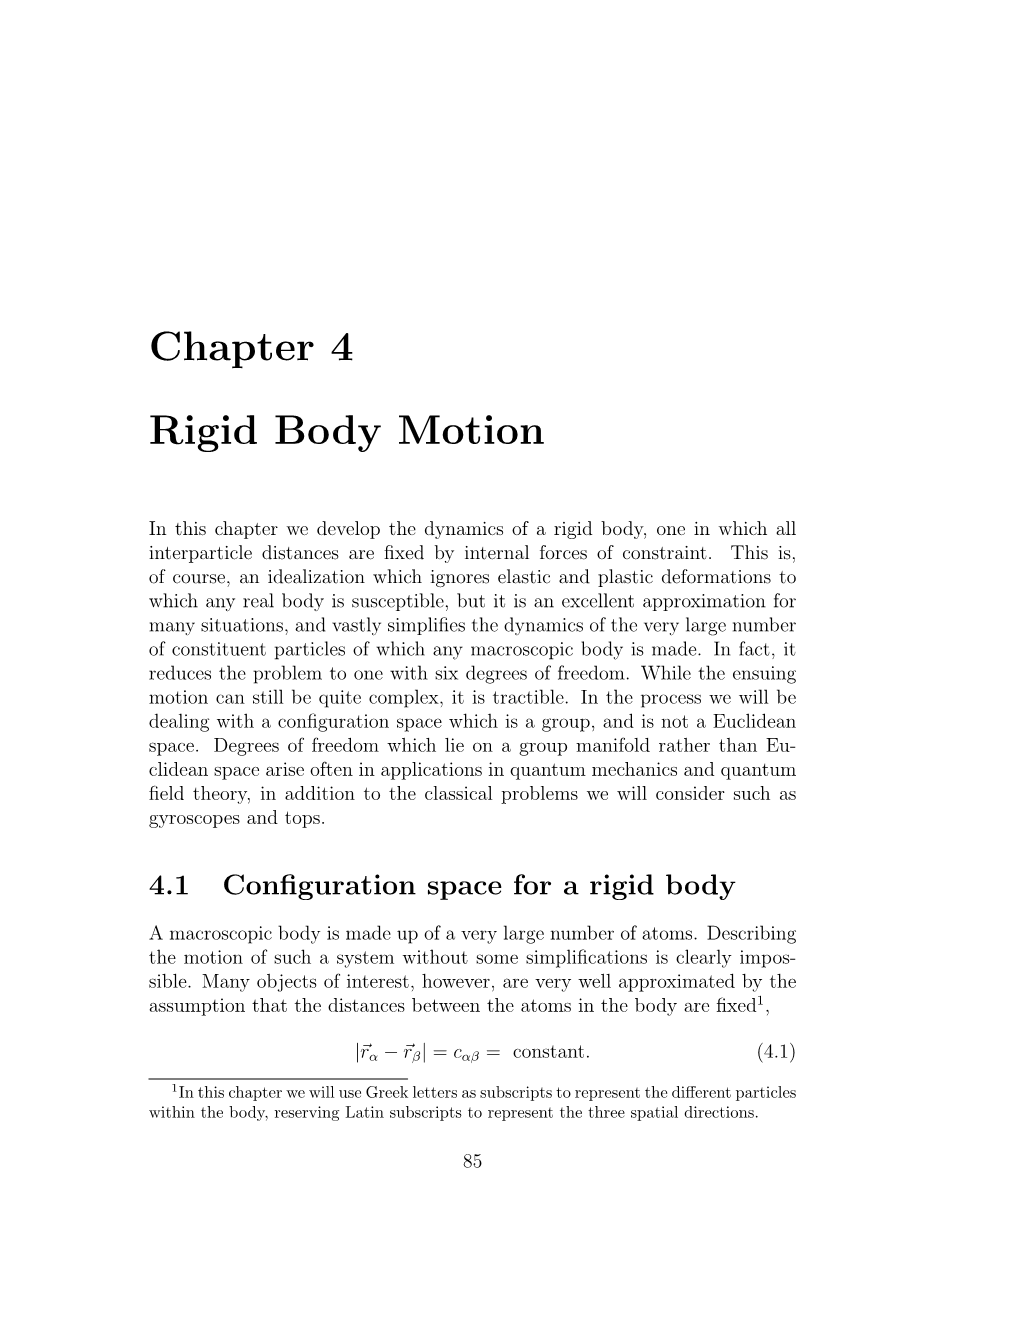 Chapter 4 Rigid Body Motion